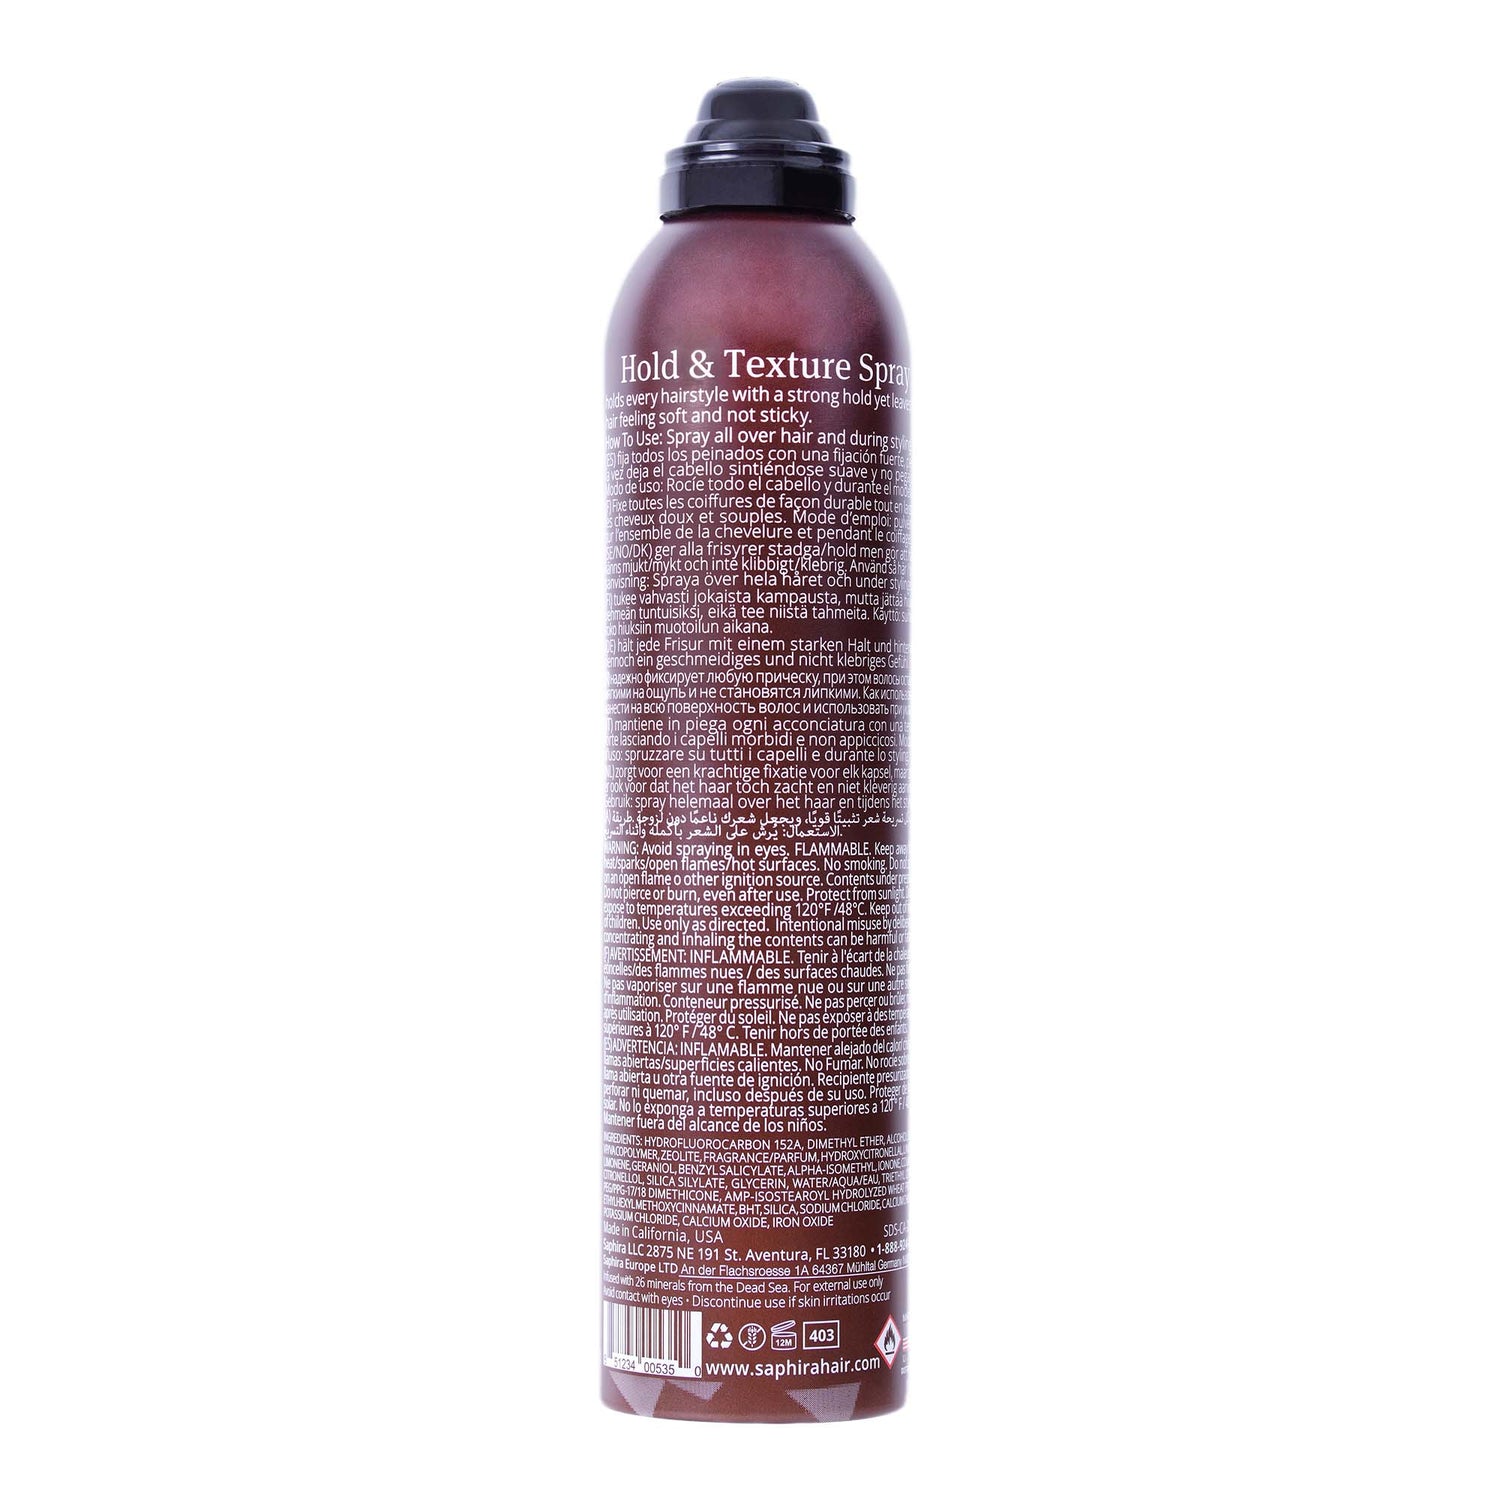 Saphira Hold & Texture Spray back label + ingredients list